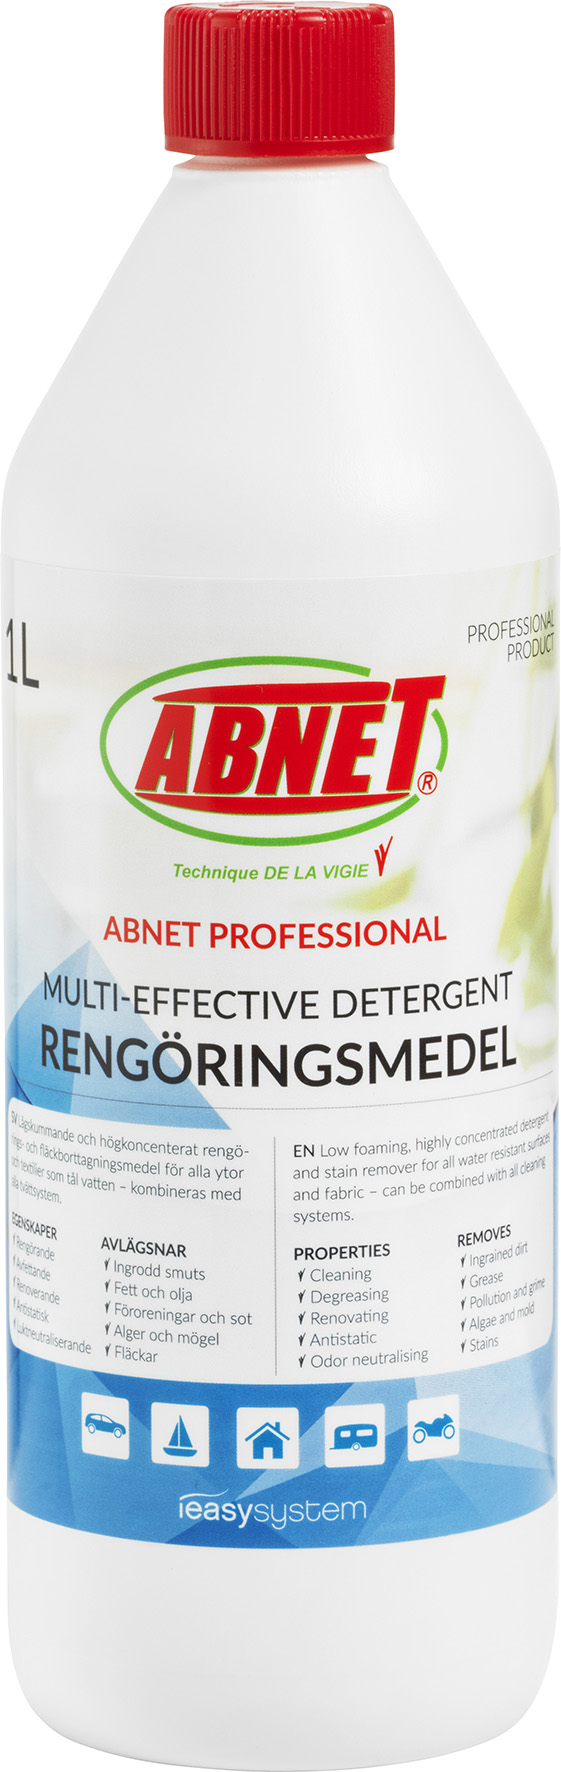 [8556287] ABNET Professional 1 Liter